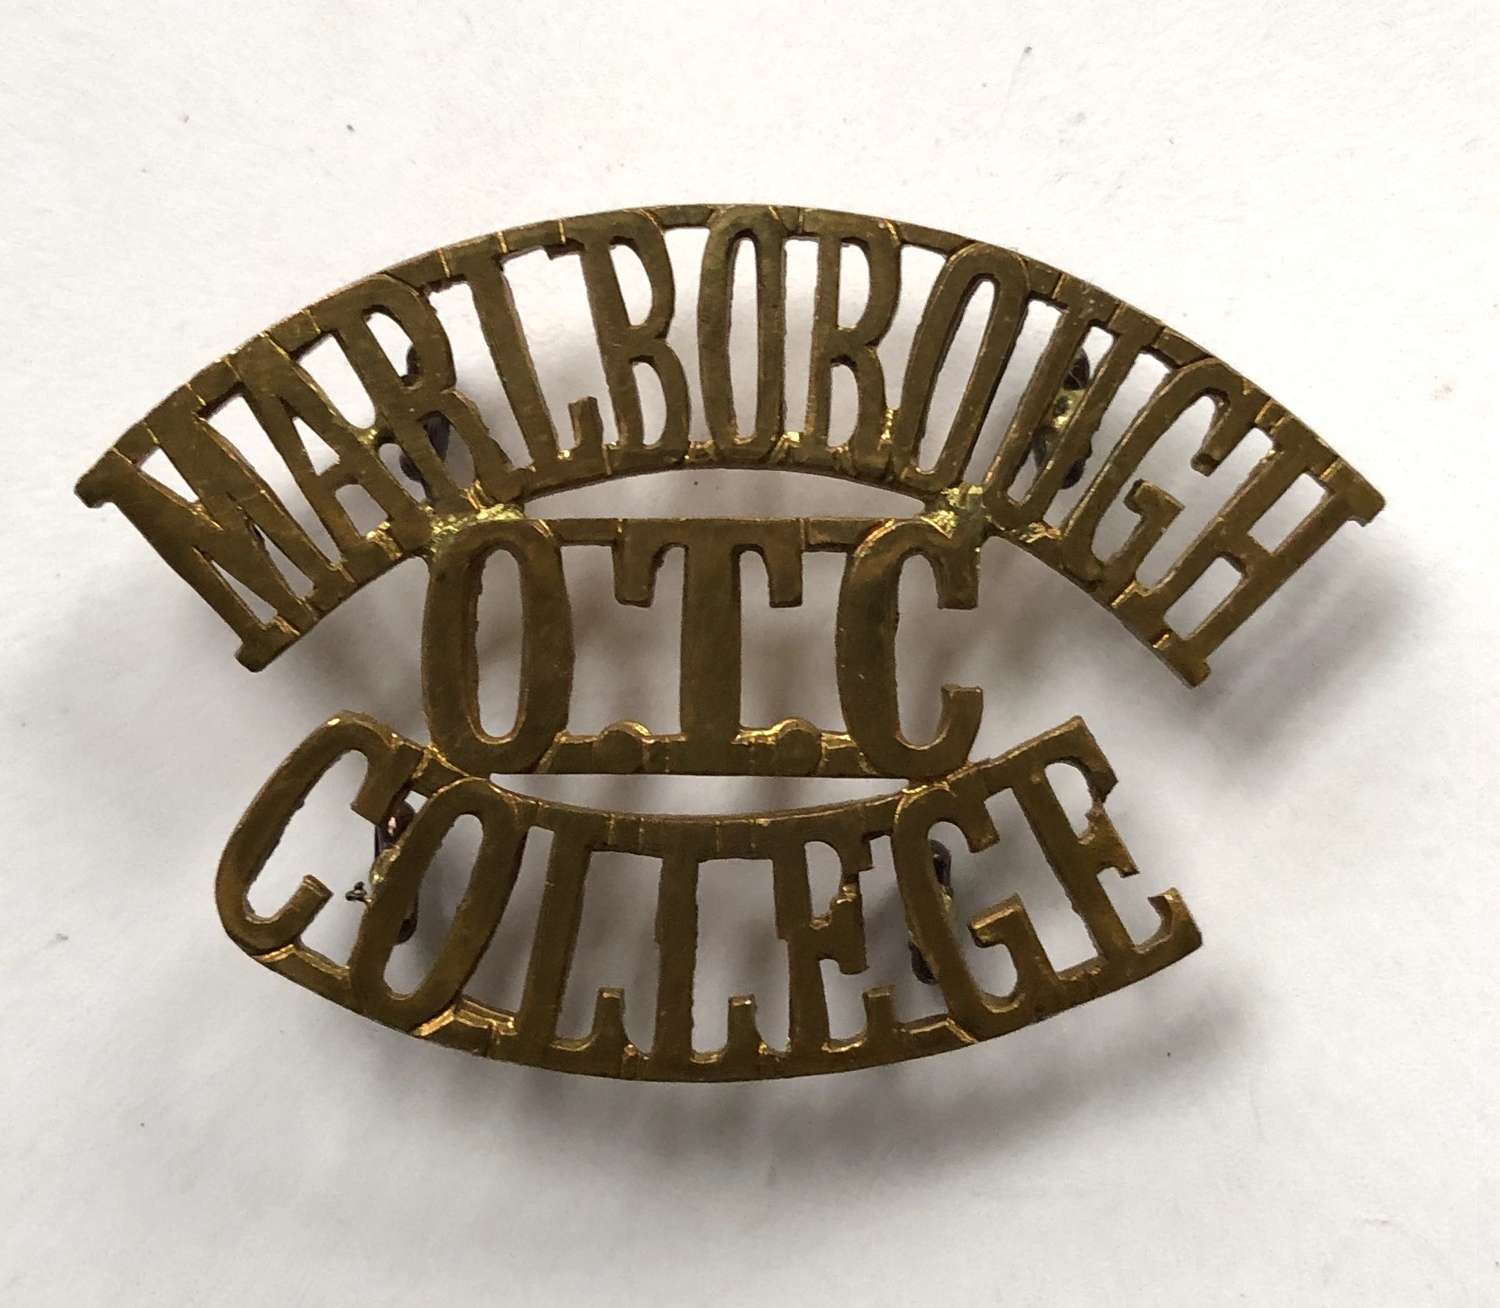 MARLBOROUGH / OTC / COLLEGE shoulder title c1908-40